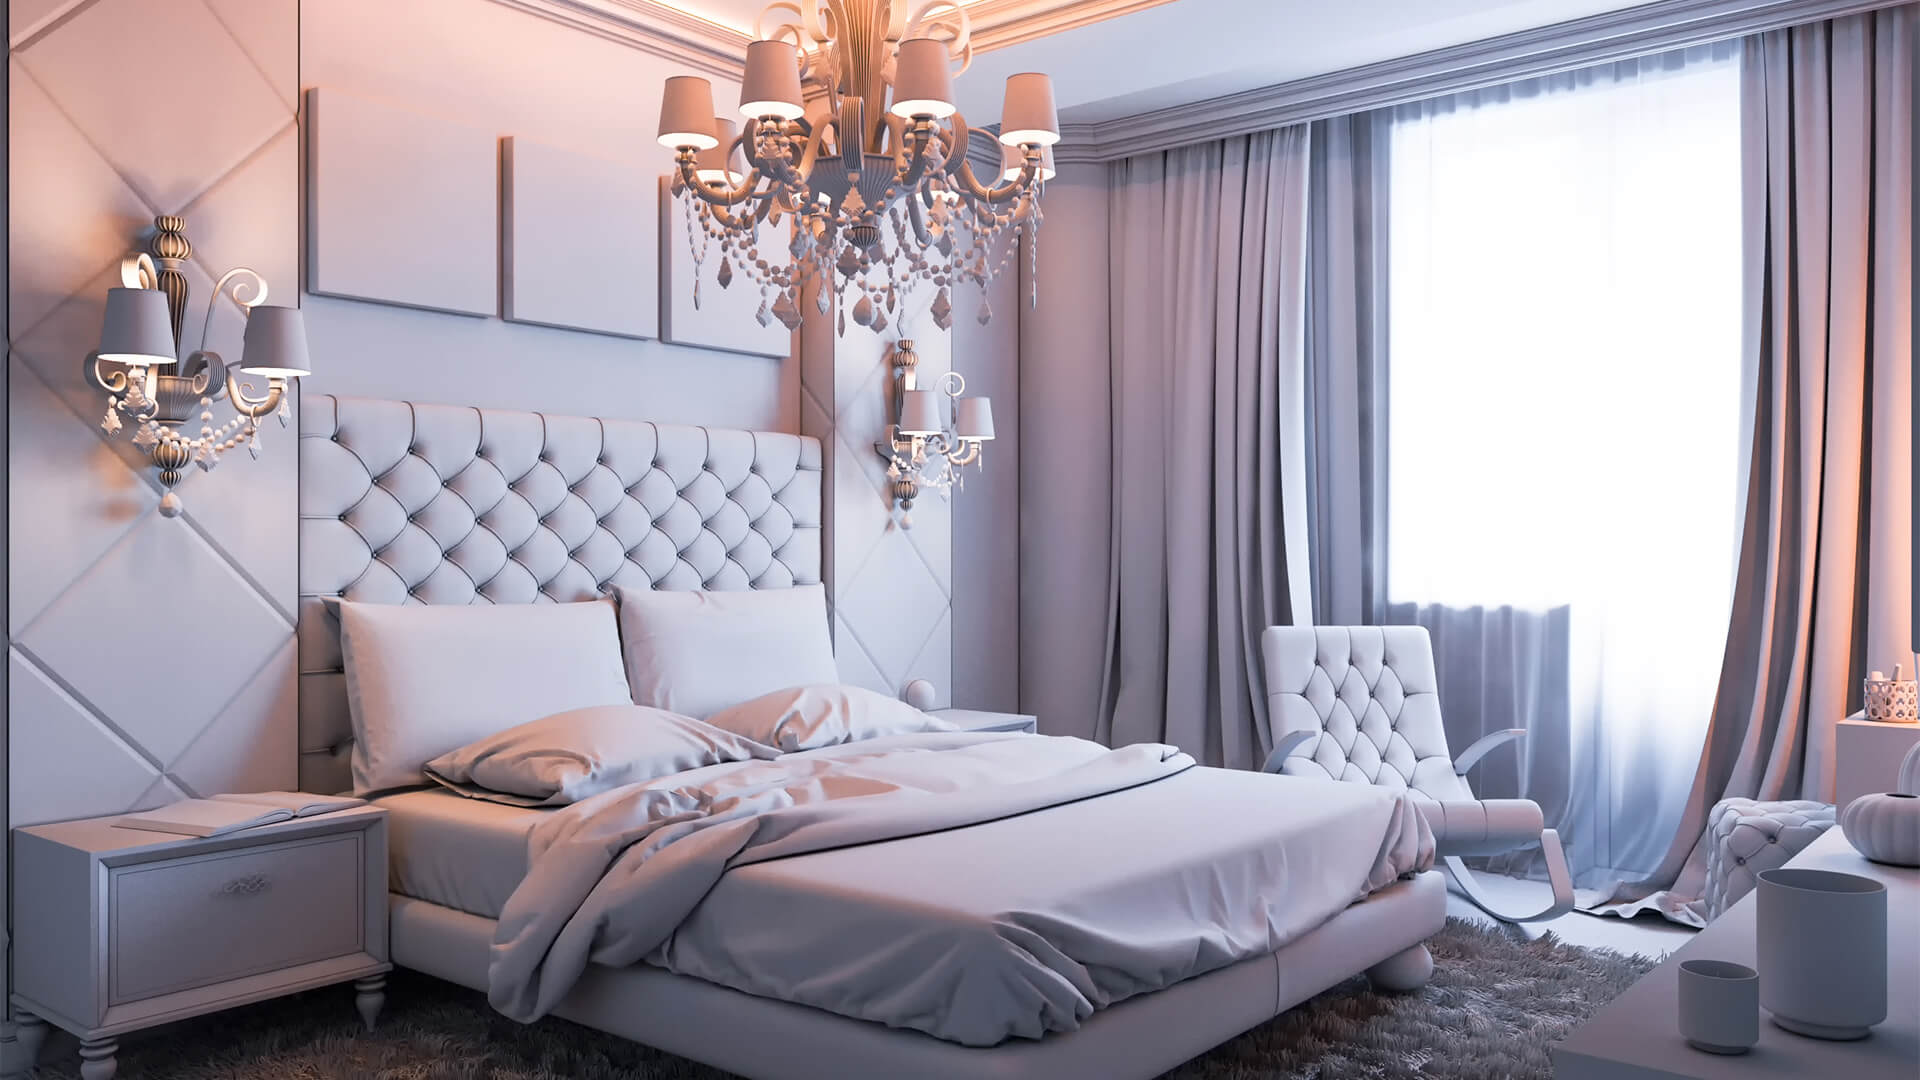 Classic Bedroom Design Ideas for Couples - BUILD Magazine